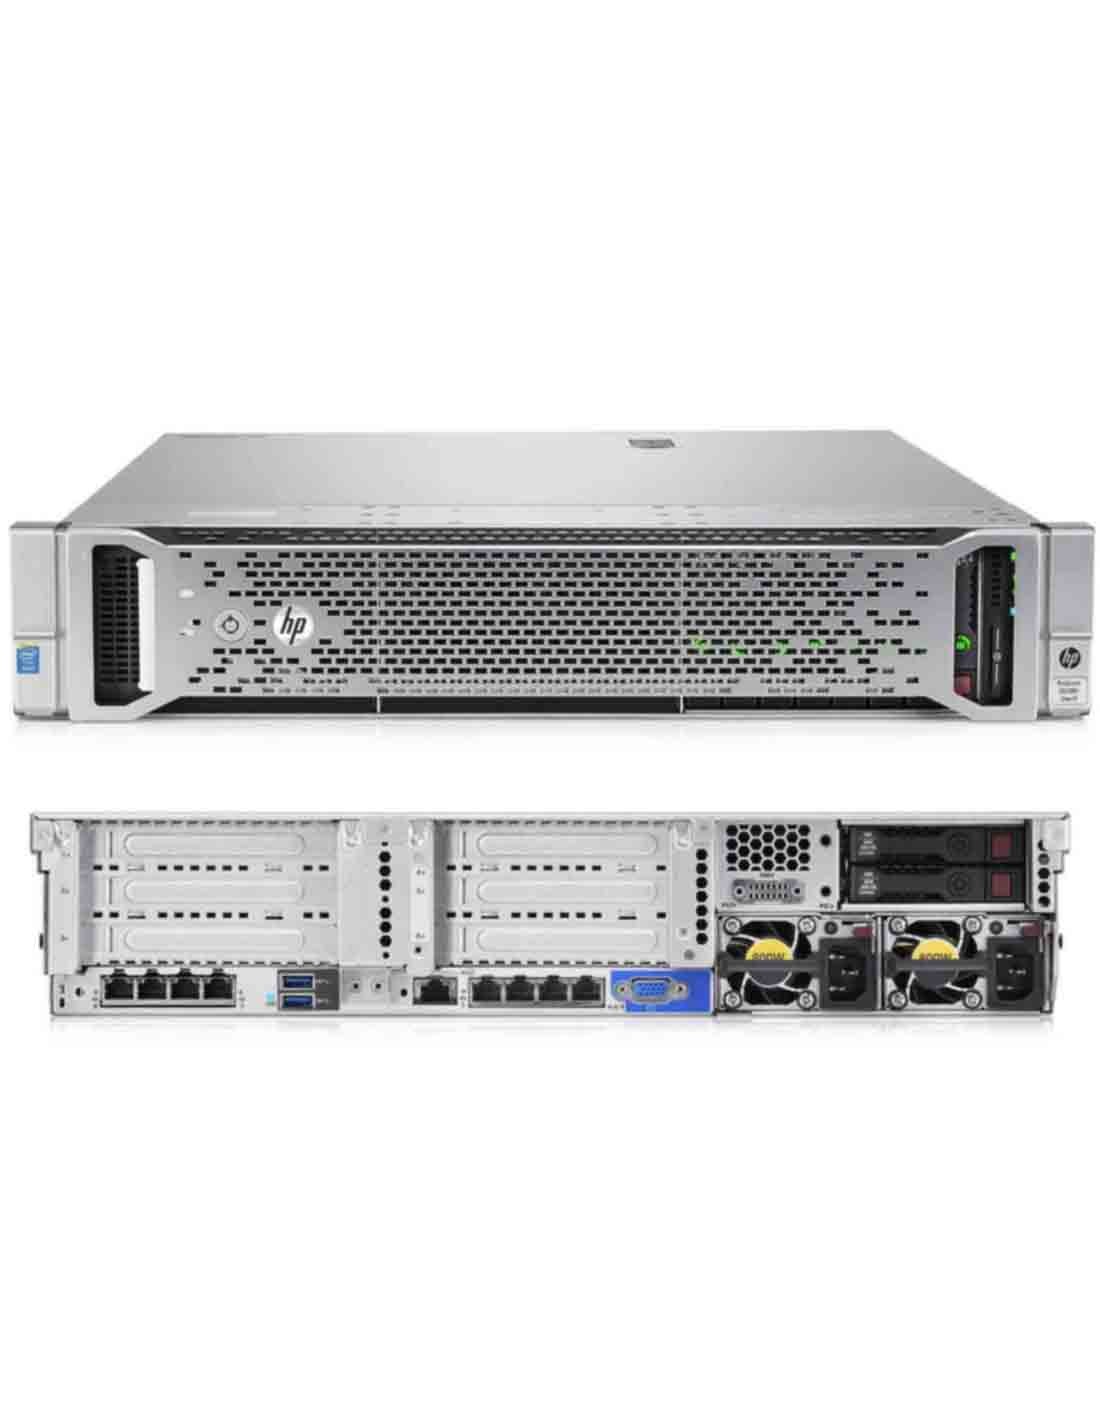 HP ProLiant DL380 Gen9 E5-2620v4 Dubai Online Store